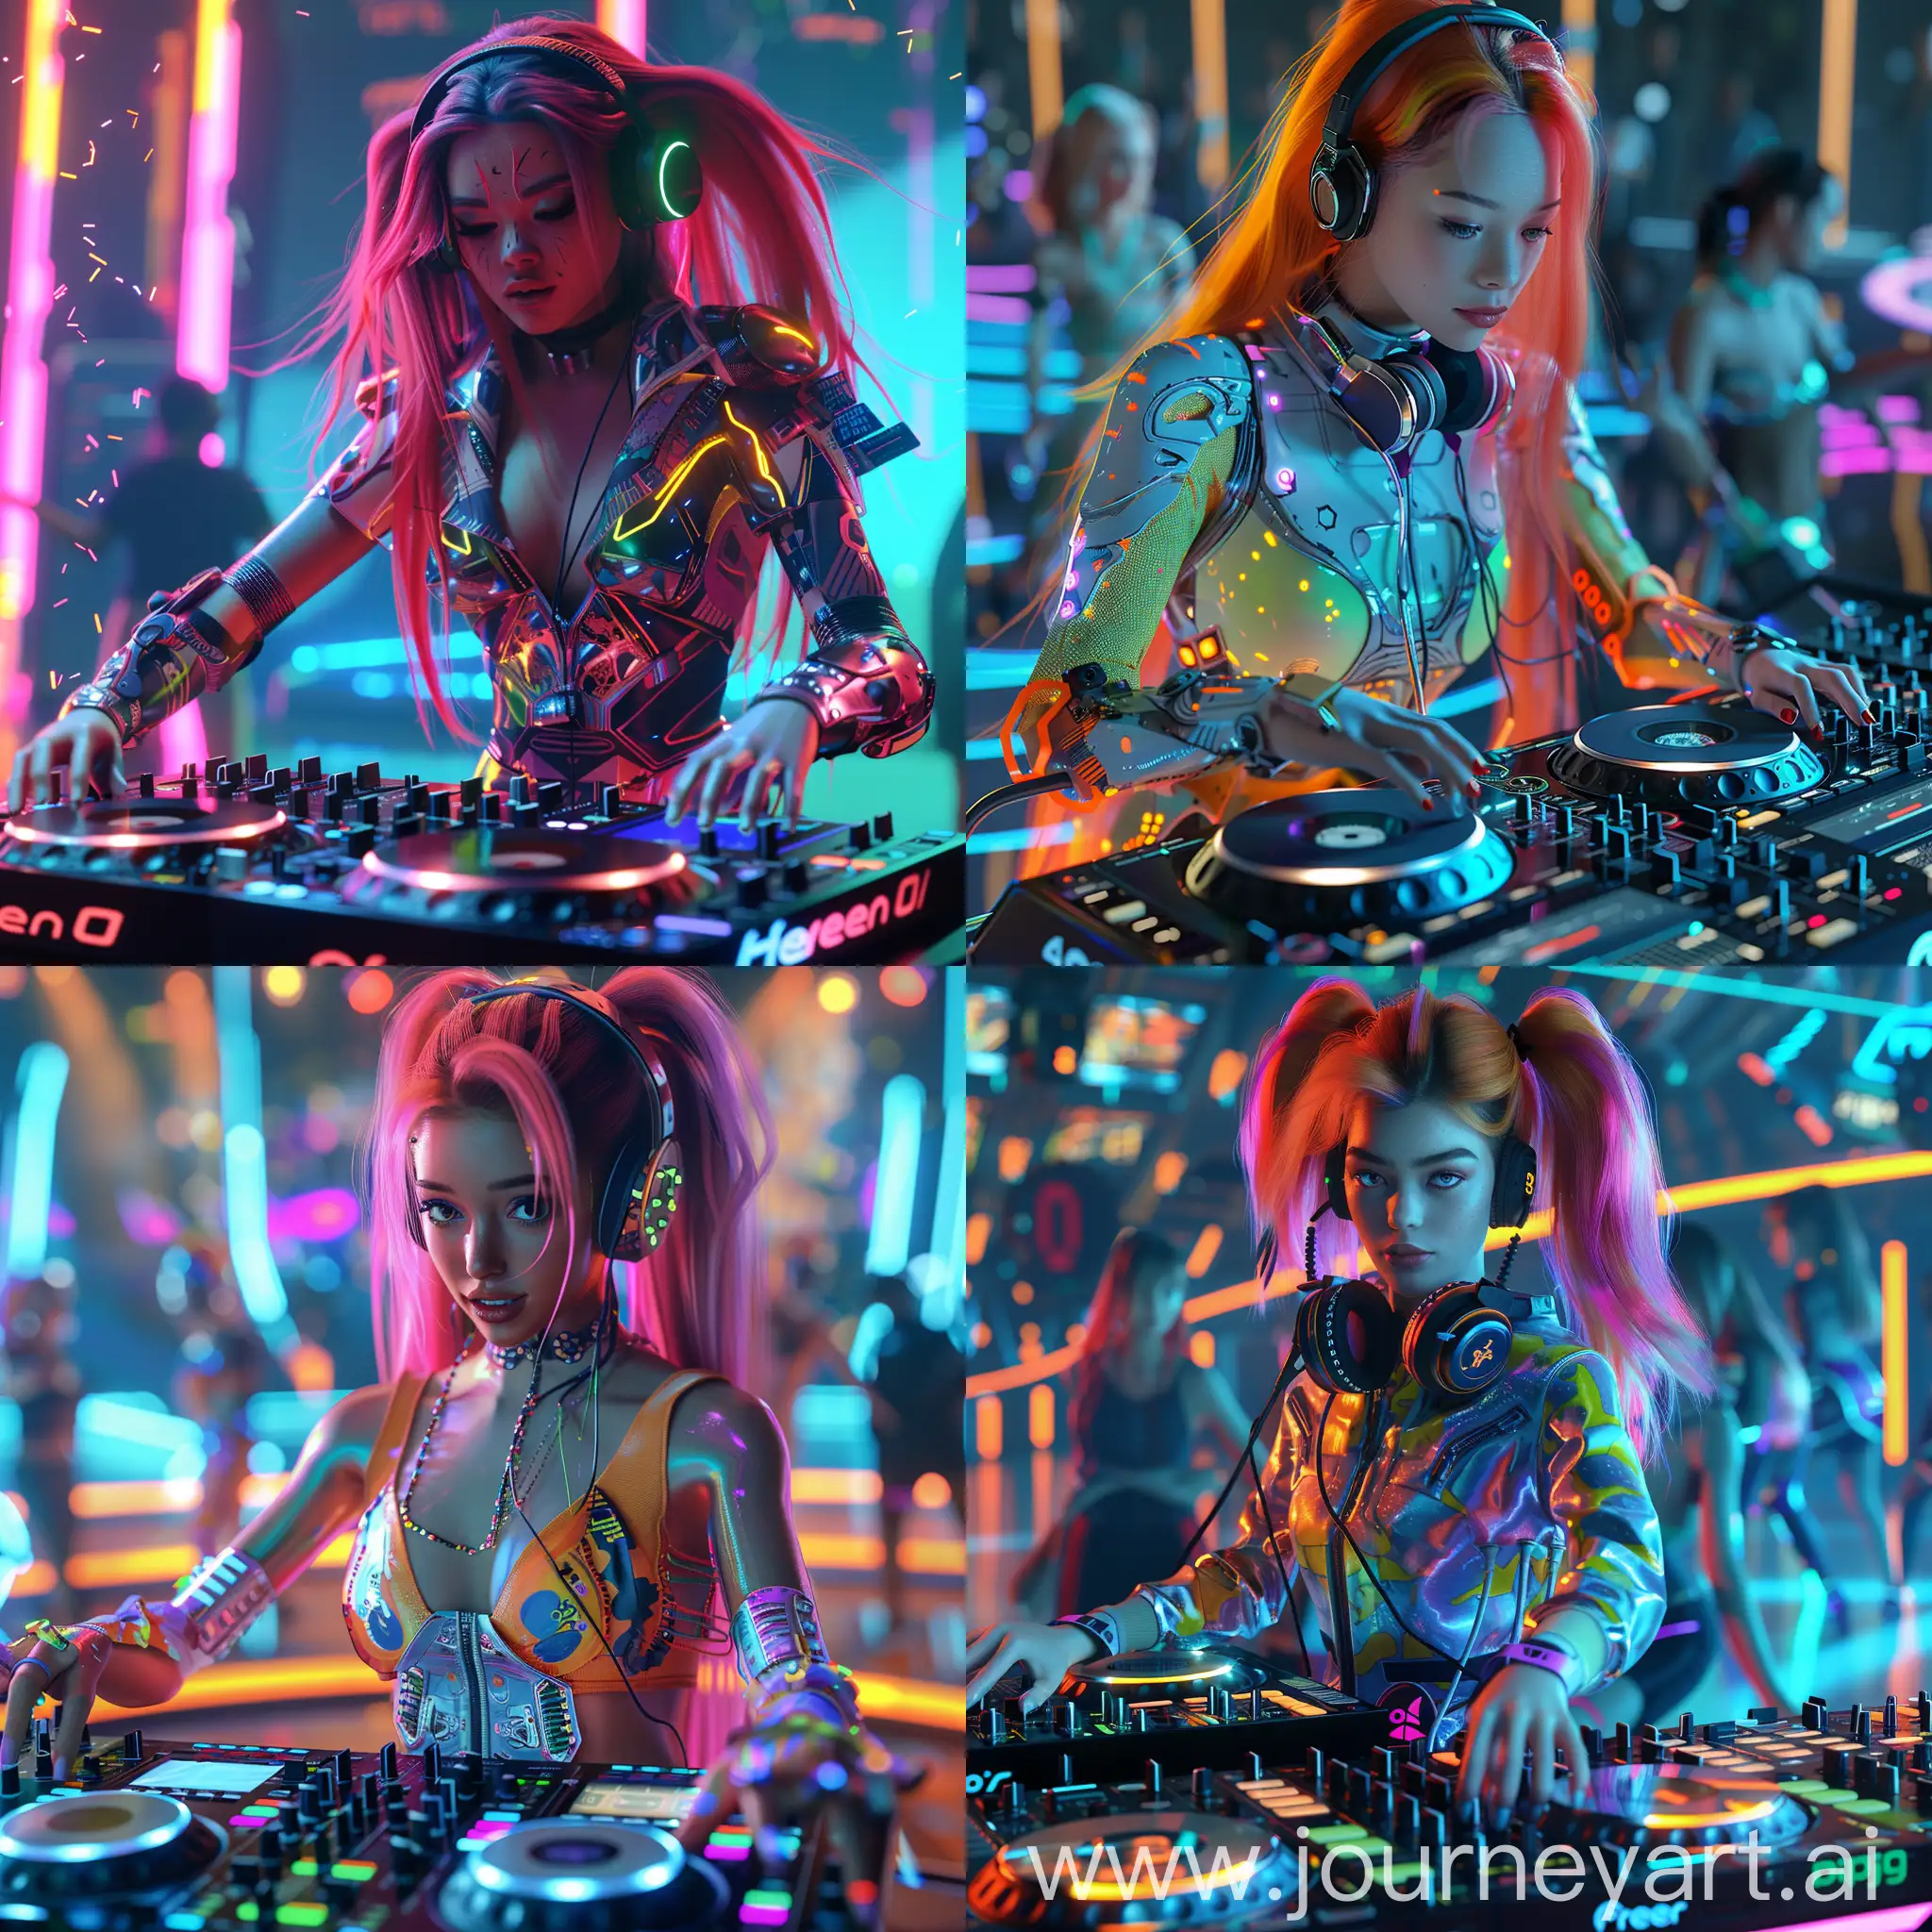 Futuristic-Girl-DJ-Spinning-Vibrant-Beats-at-FullScreen-Dance-Party